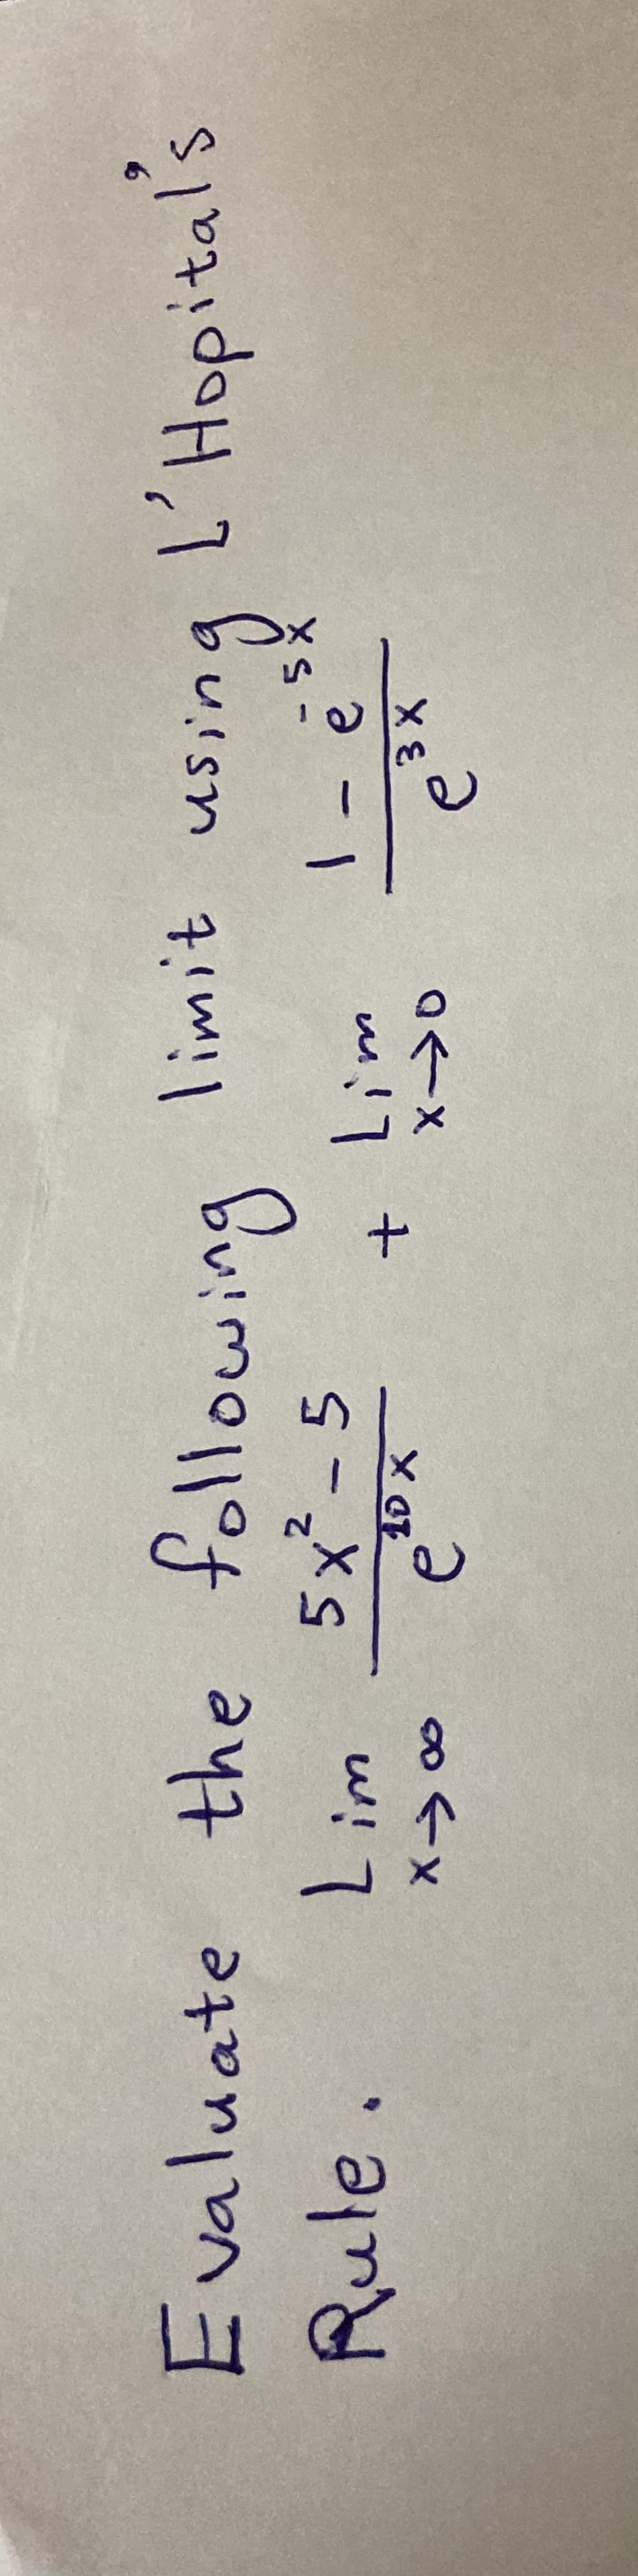 Evaluate the following
Rute.
5x²- 5
w! 7
L'Hopital's
1-
3X
